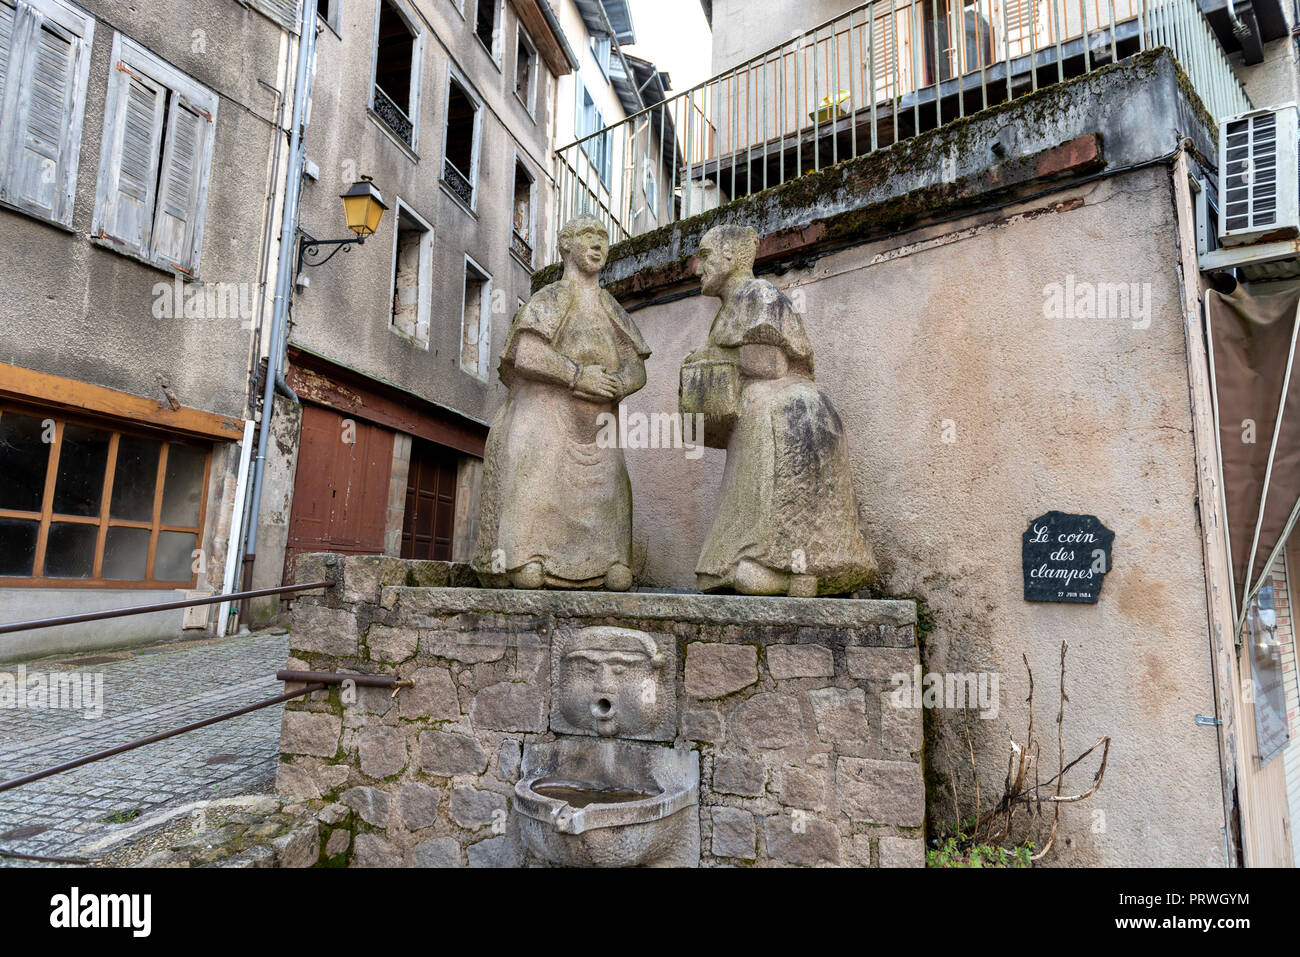 Francia- TULLE- Corrèze y prefectura 2017 - Place Jean Tavé - Le Coin des Clampesv lado carretera estatua en Francia. Foto de stock